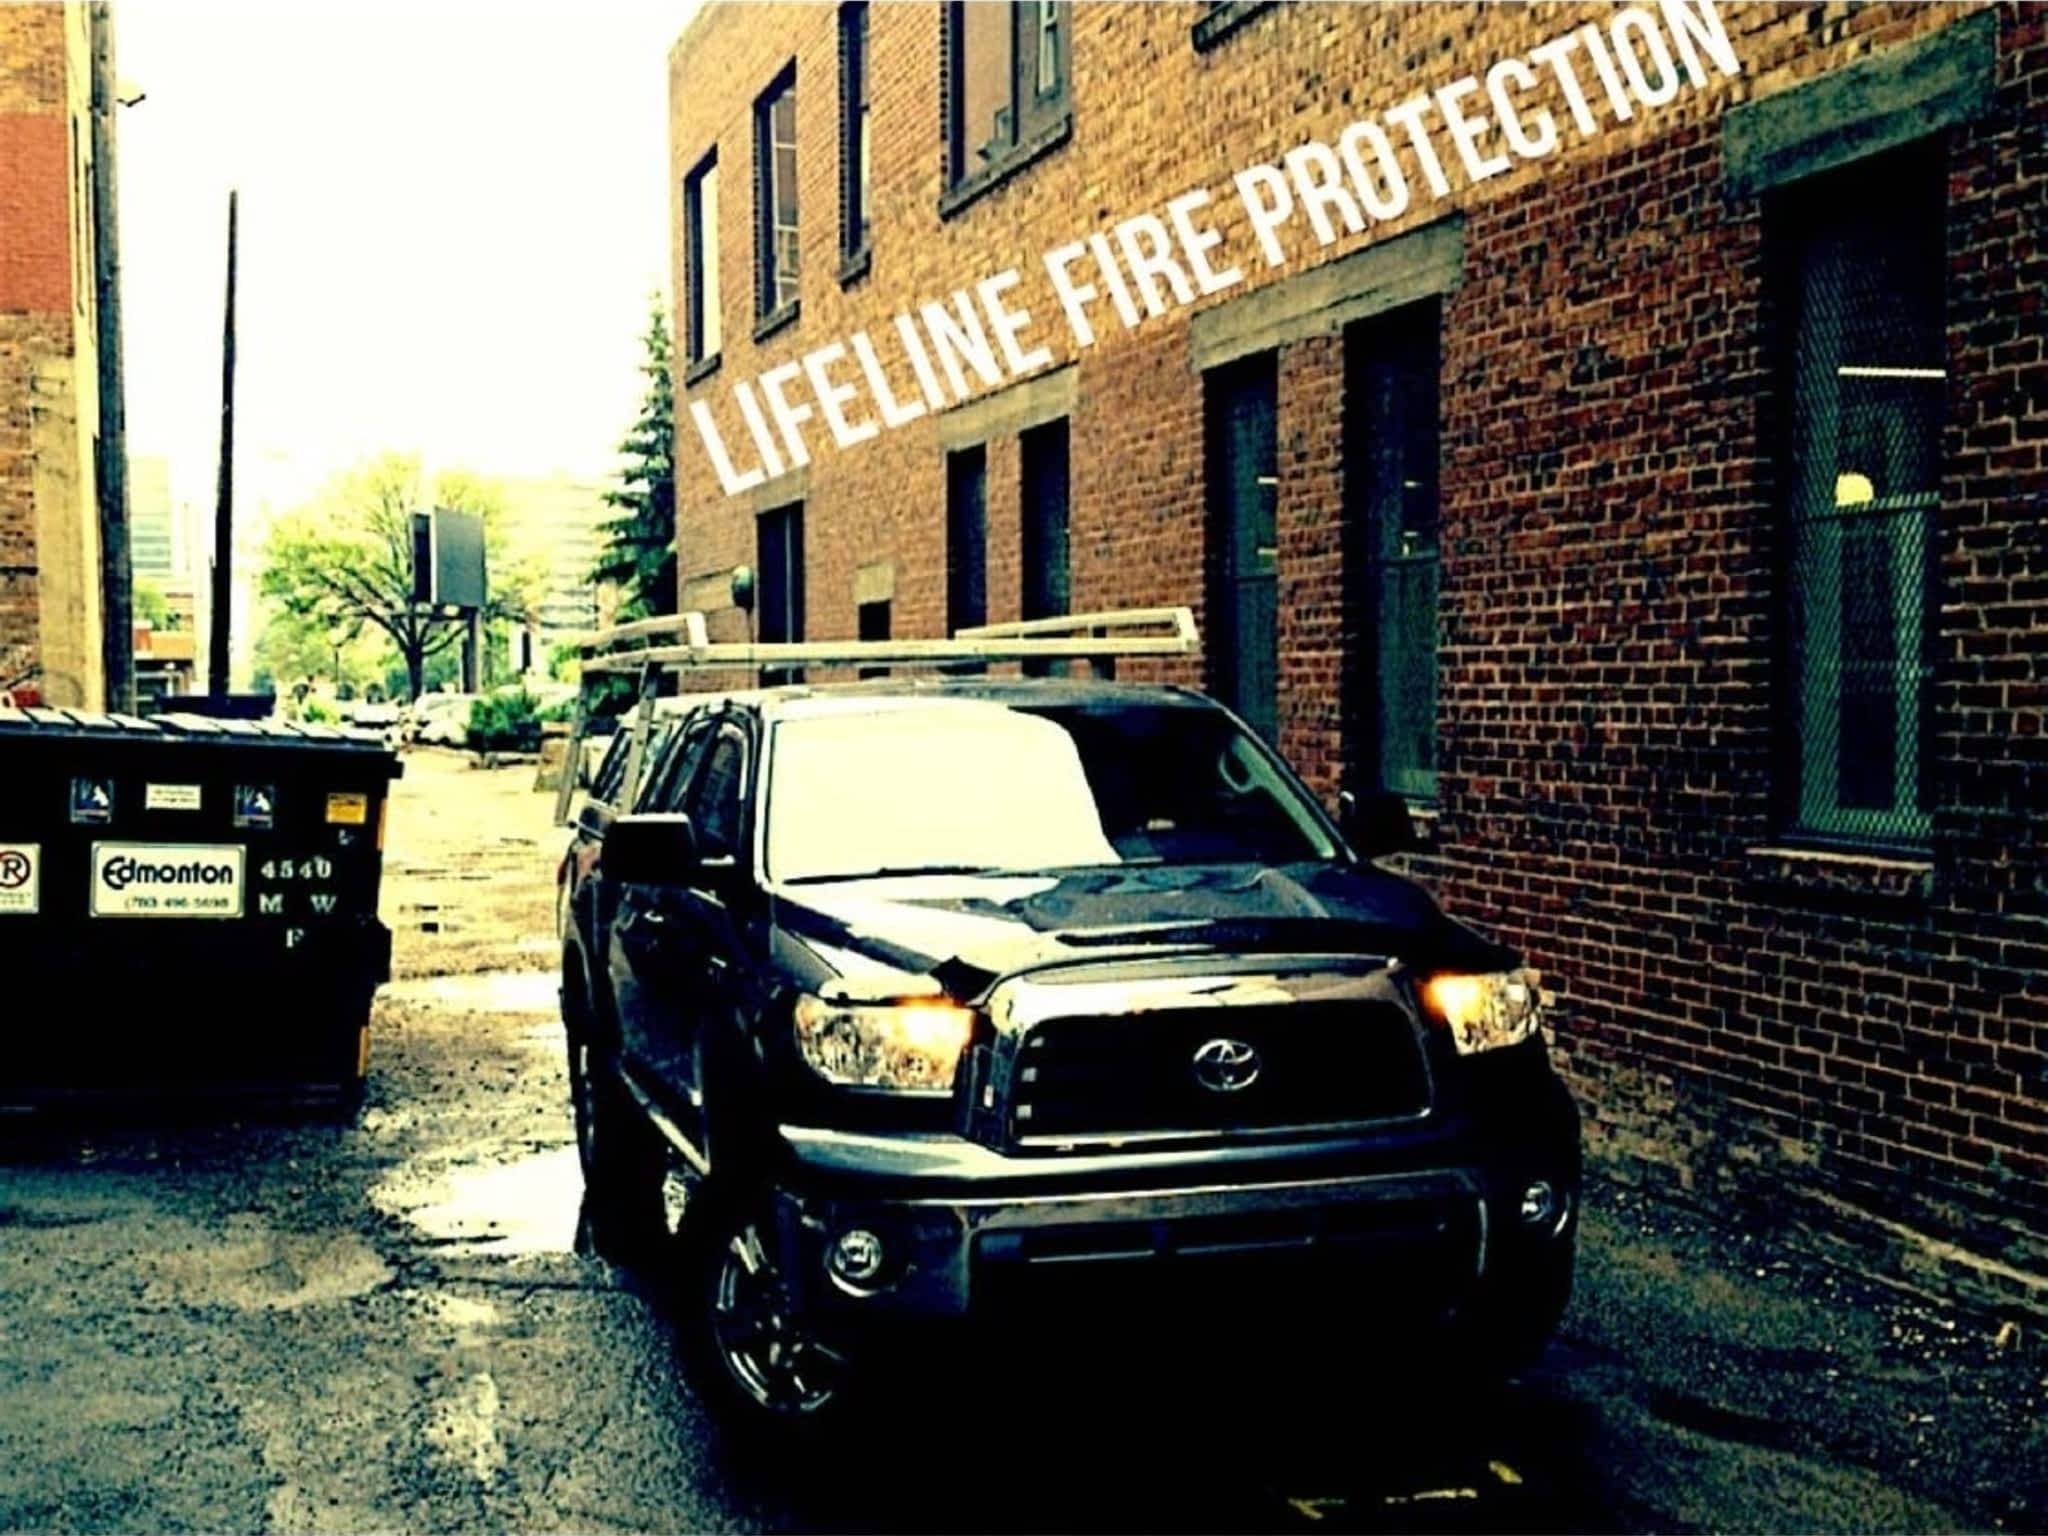 photo Lifeline Fire Protection Inc.